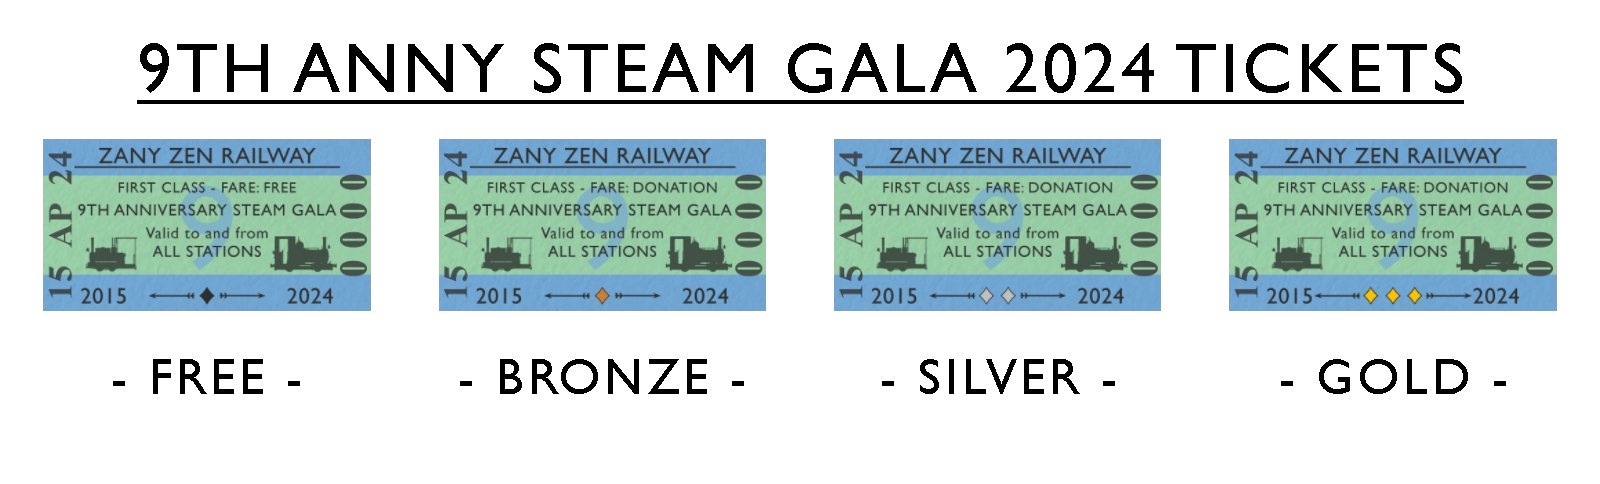 The Zany Zen Railway 9th Anny steam gala ticket designs